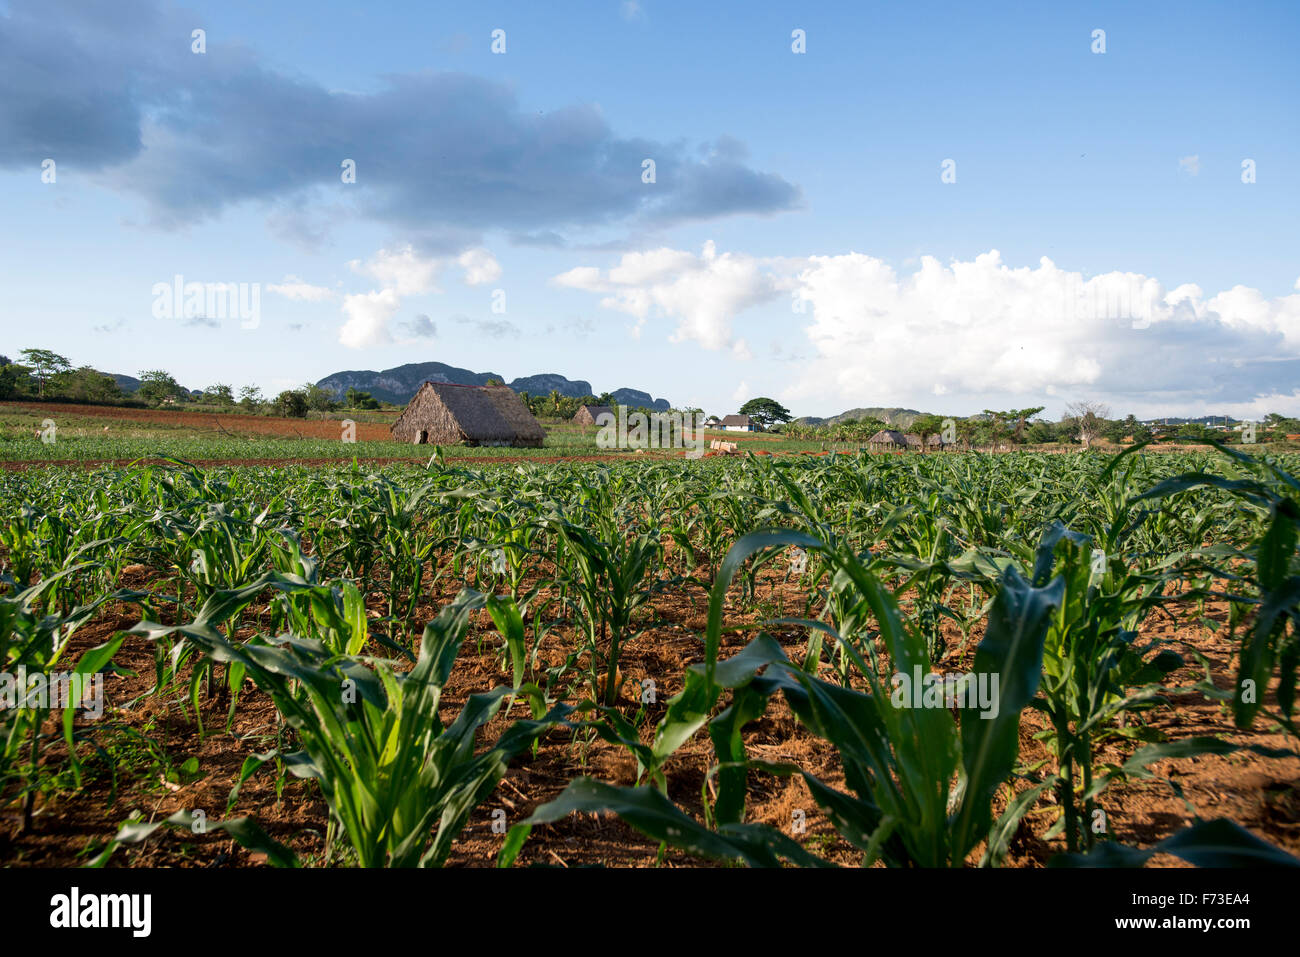 A farm field in Viñales, Cuba. Stock Photo